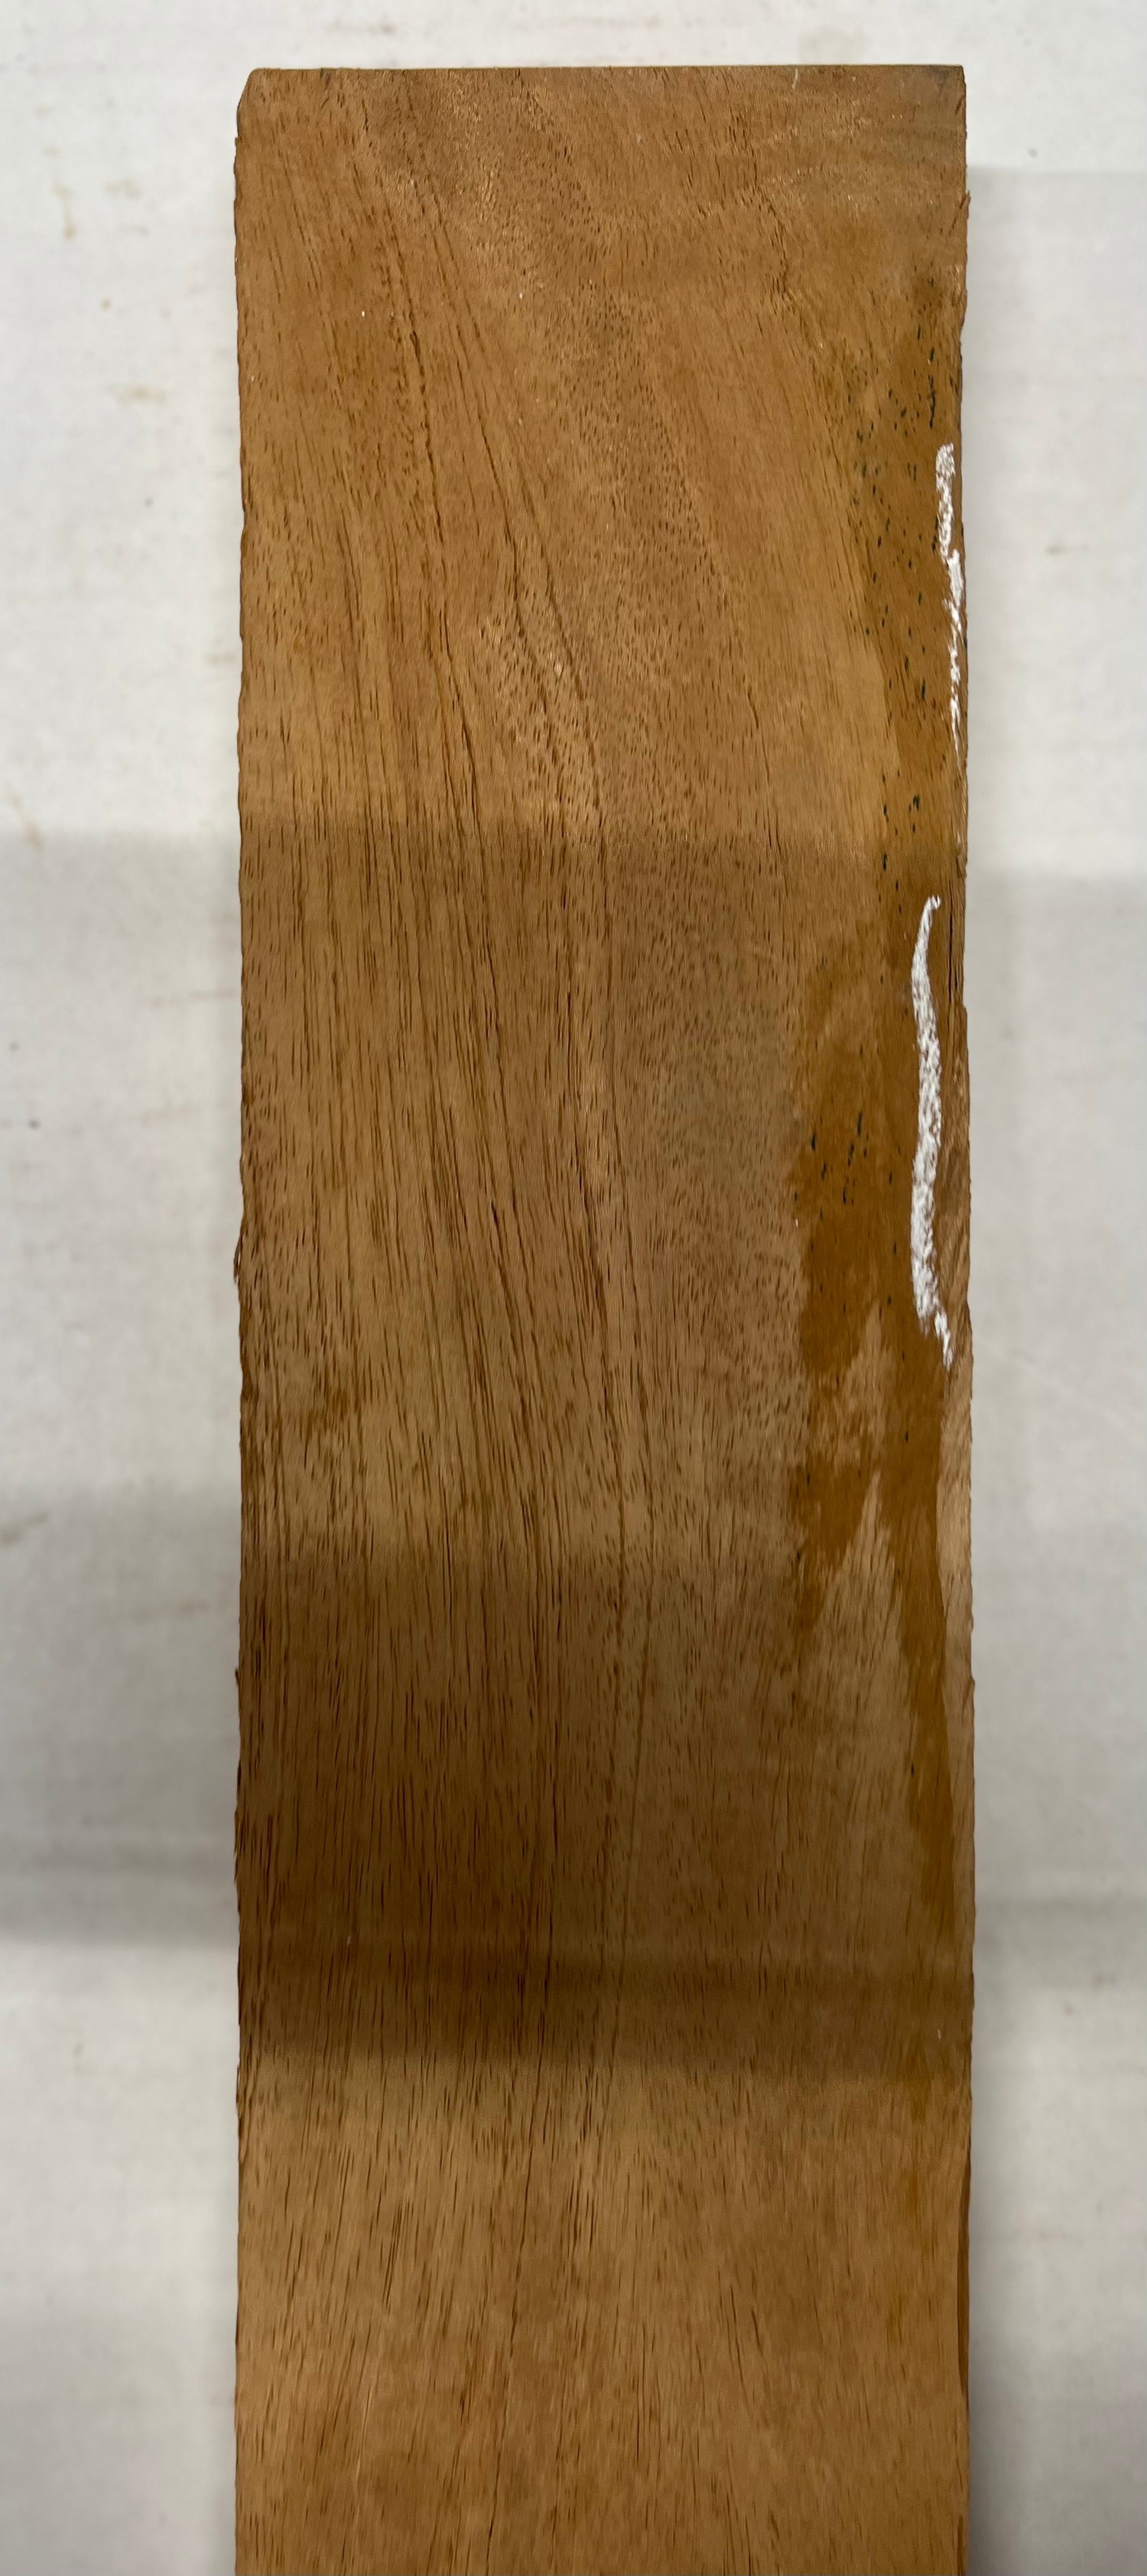 Spanish Cedar Thin Stock Three Dimensional Lumber Board 21&quot;x4&quot;x1-3/8&quot; 